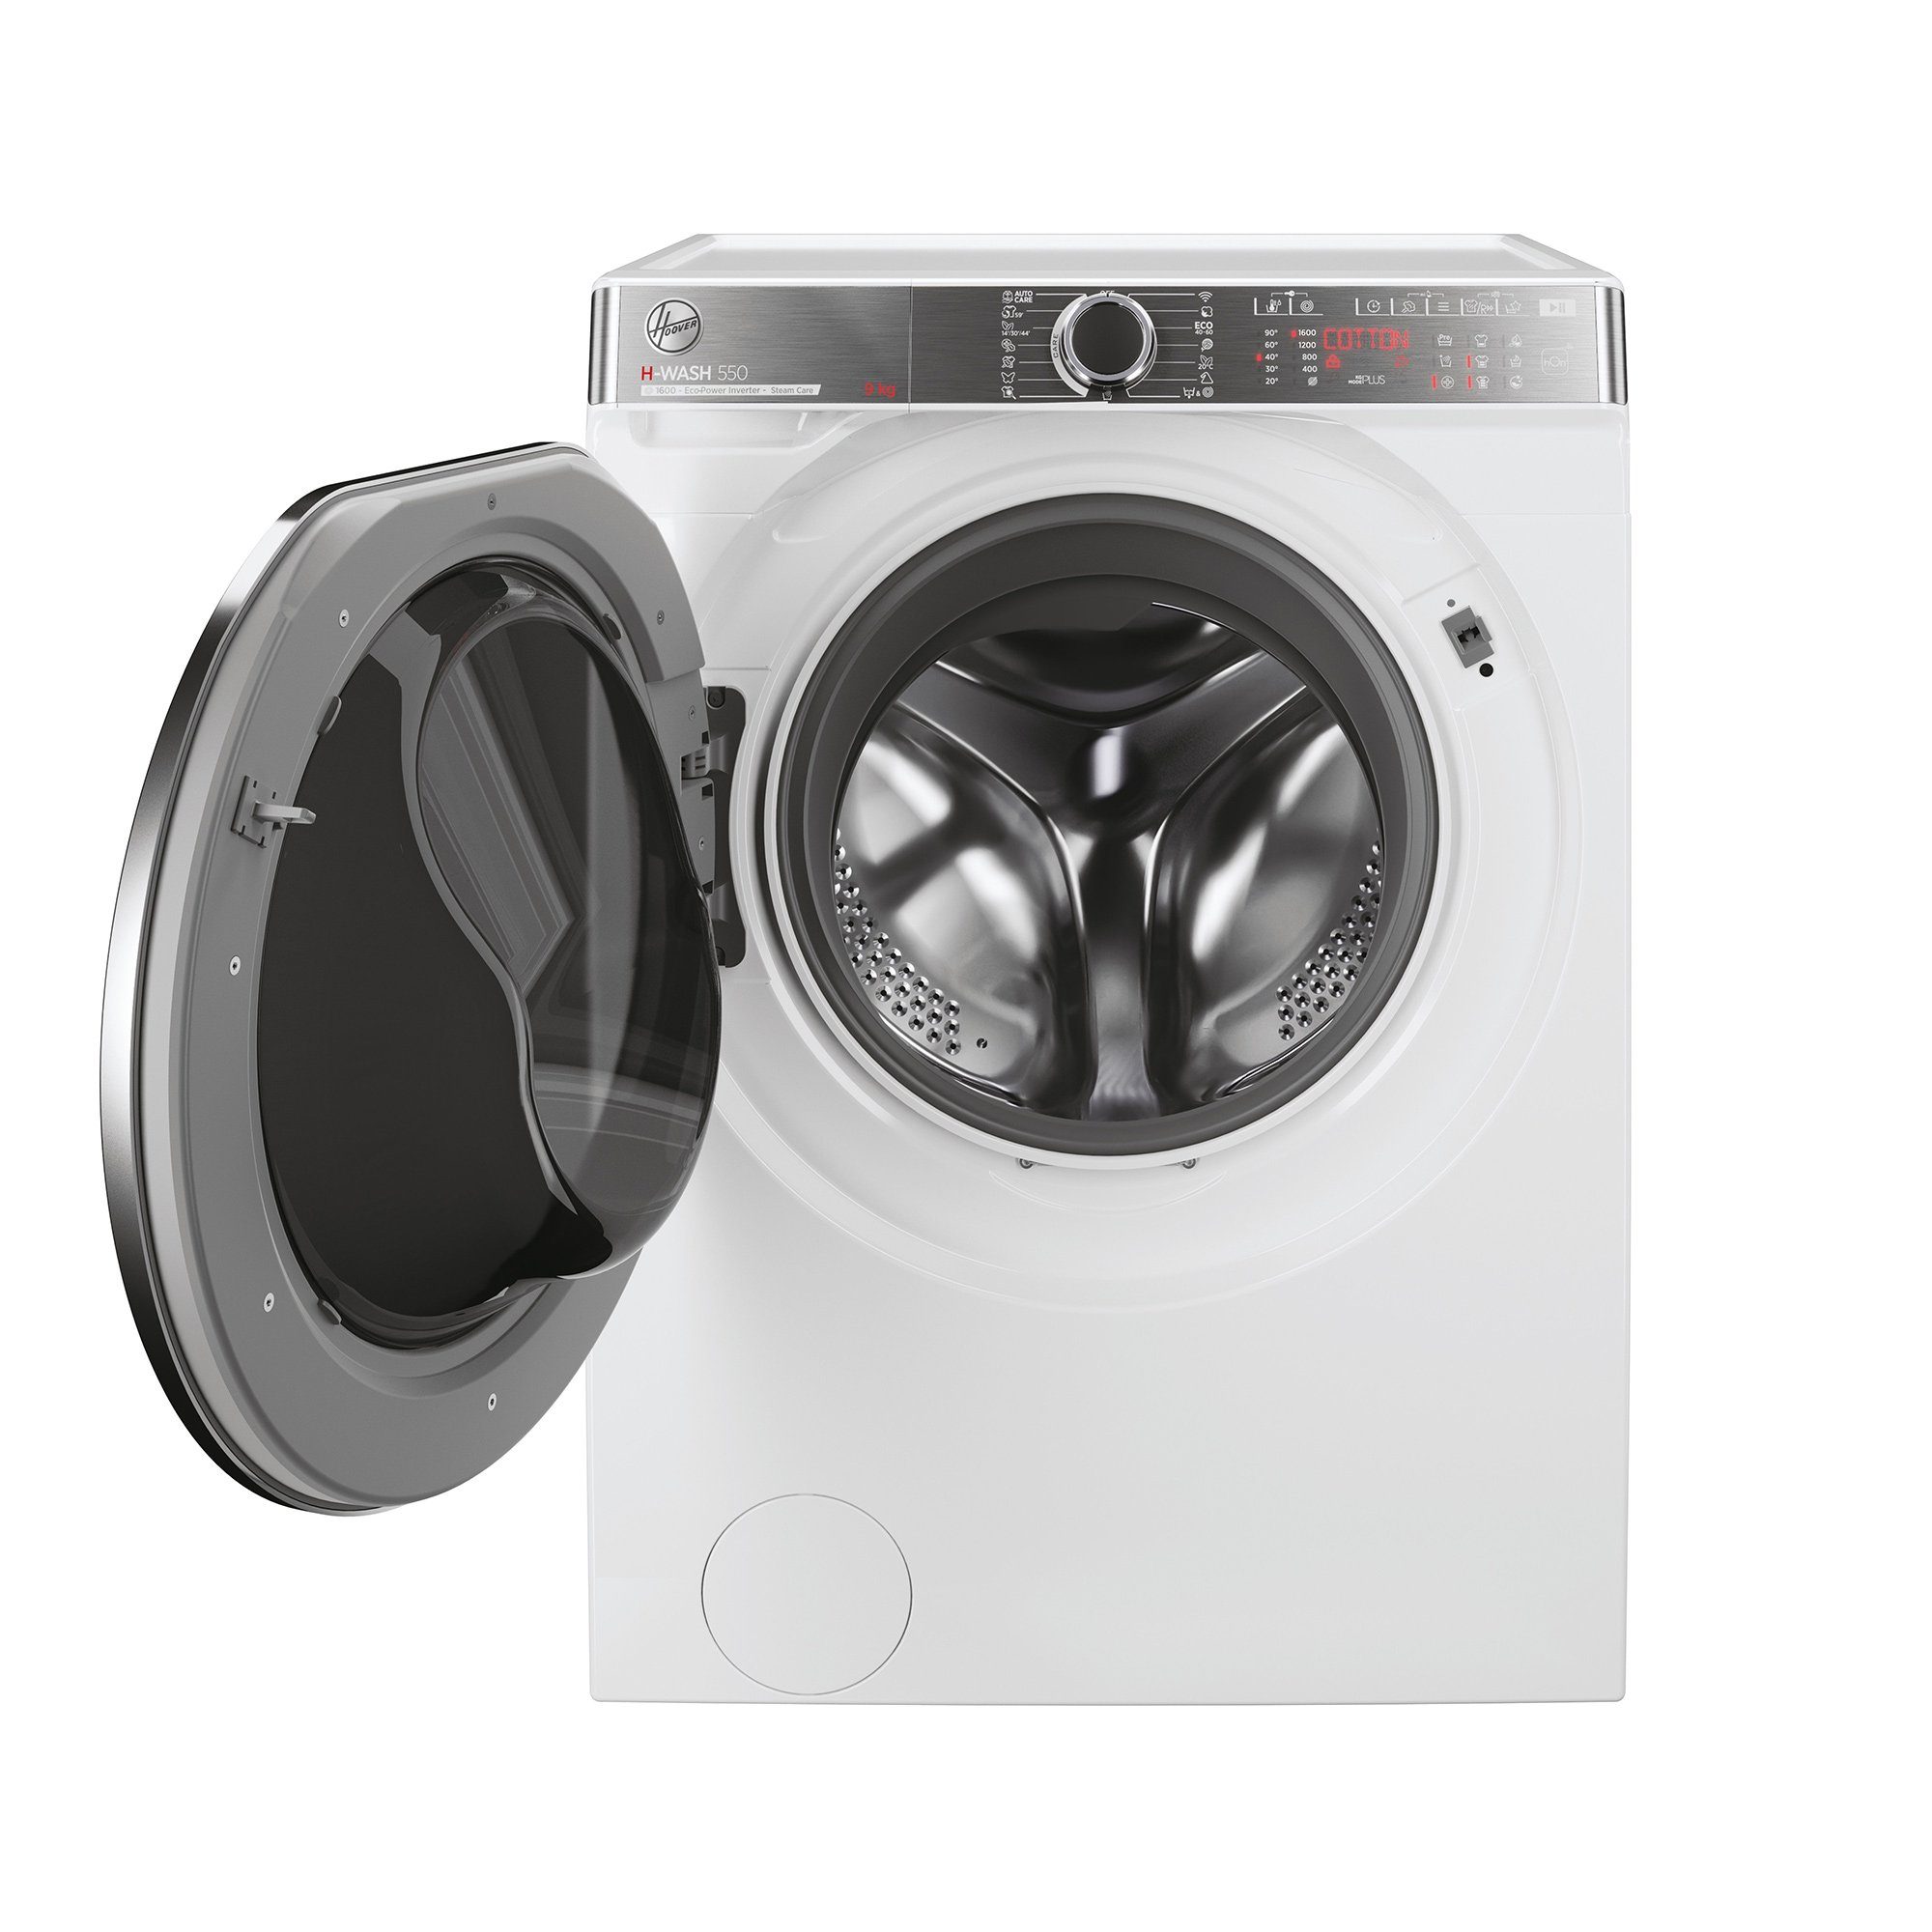 Hoover Waschmaschine H-WASH App H5WPB69AMBC/1-S, / + 9 Expert Plus 1600 U/min, Programme, Mengenautomatik kg, 14 Design Wi-Fi Bluetooth, 550 hOn